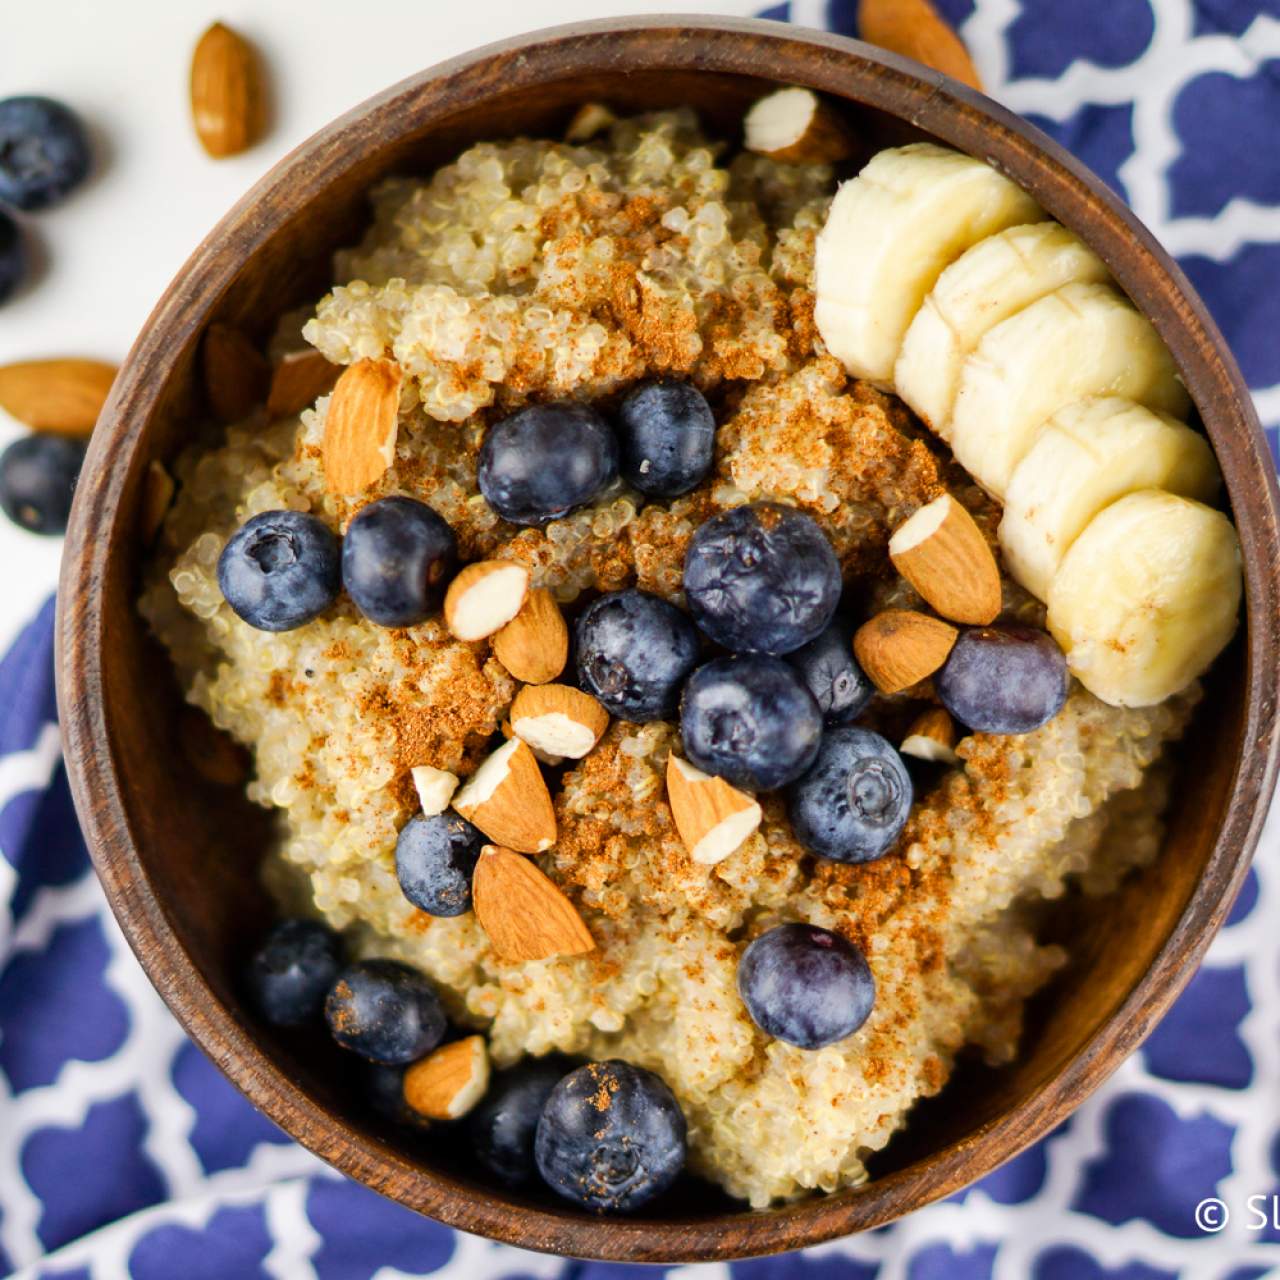 Healthy Breakfast Idea: Quinoa breakfast bowl